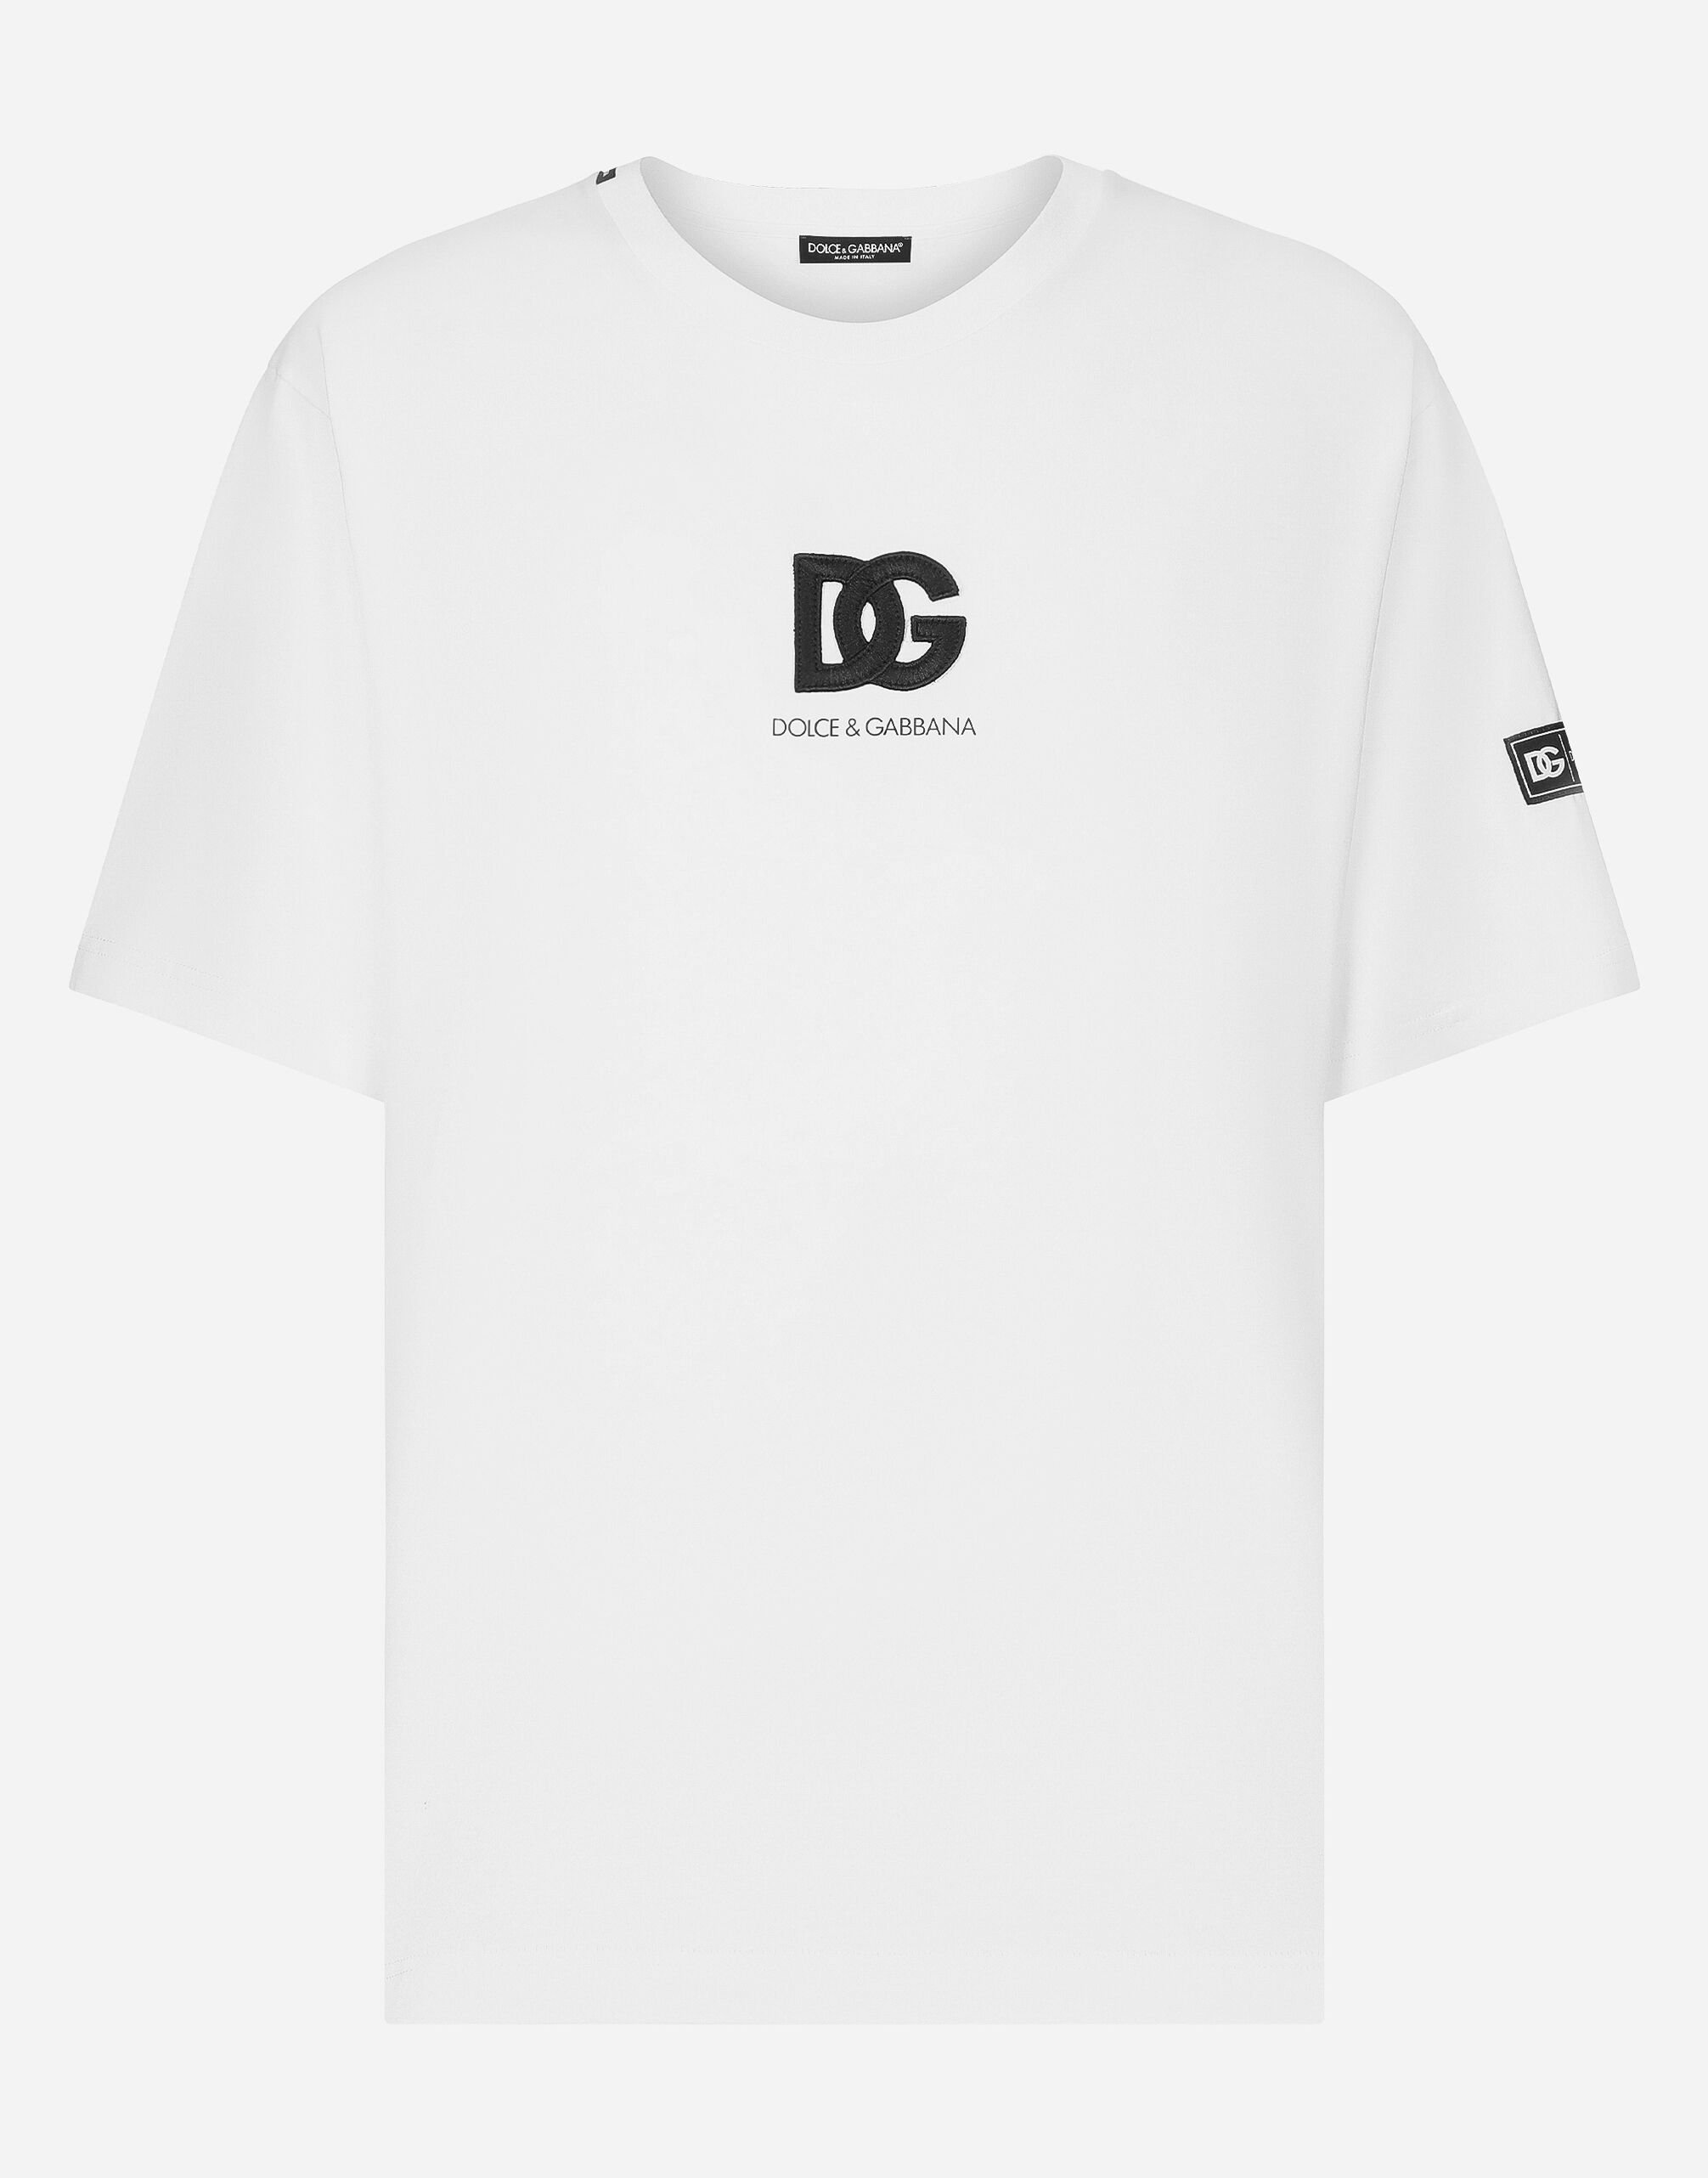 Dolce & Gabbana Short-sleeved T-shirt with DG logo patch White GXX09ZJCVS3